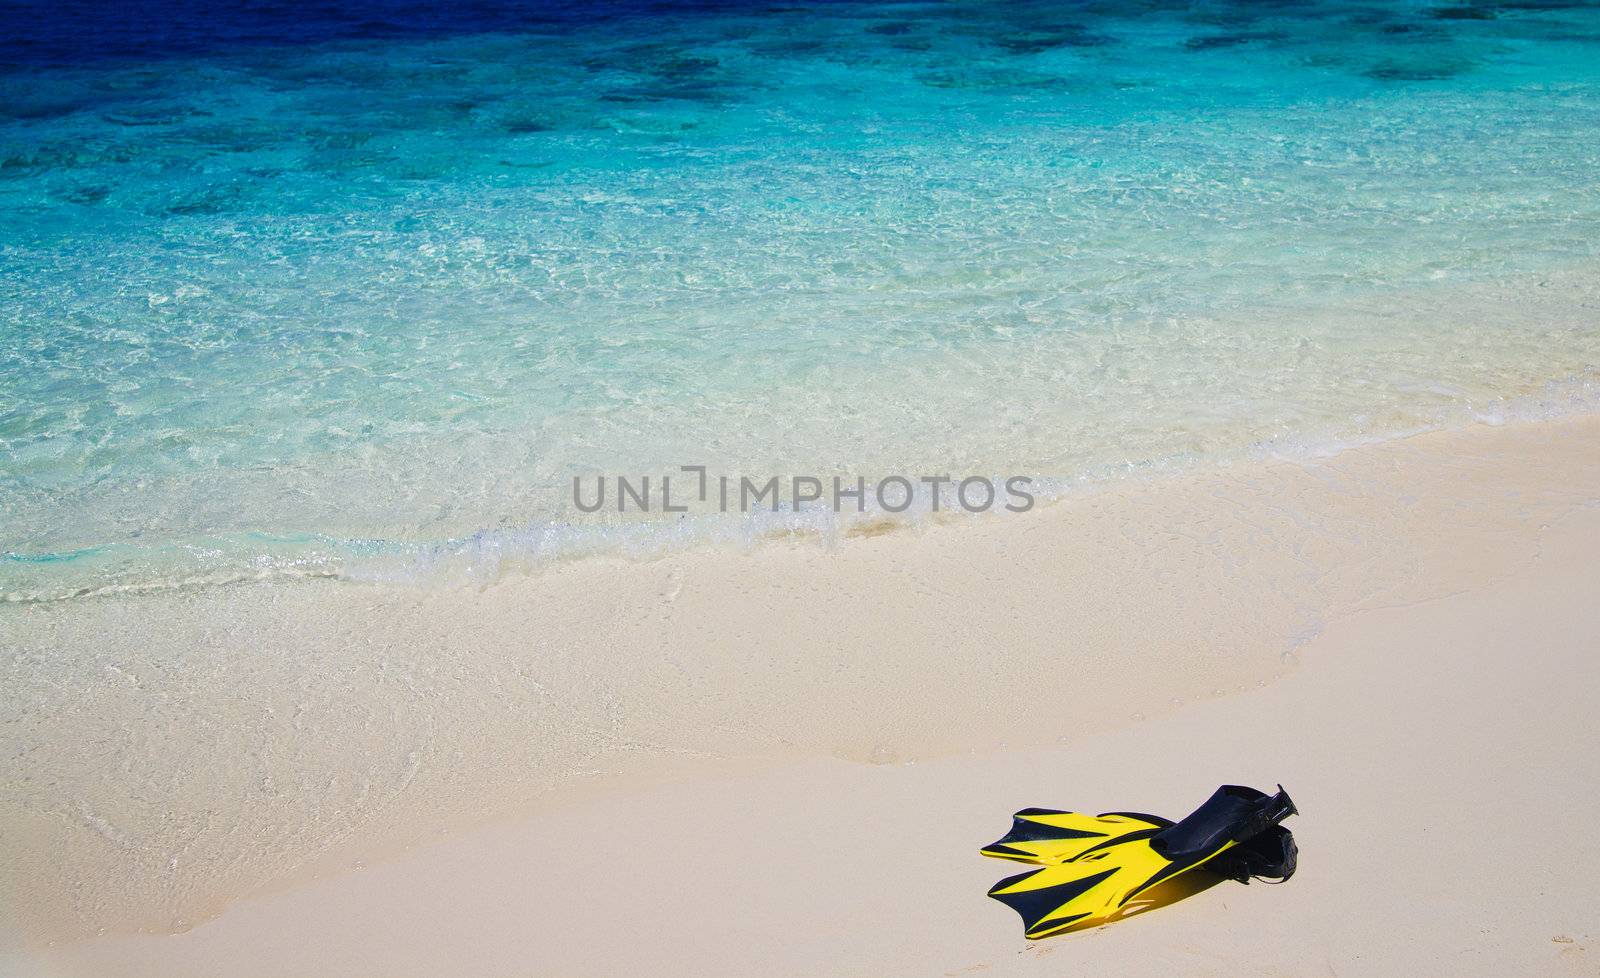 snorekl equipment on white sand beach at Maldives